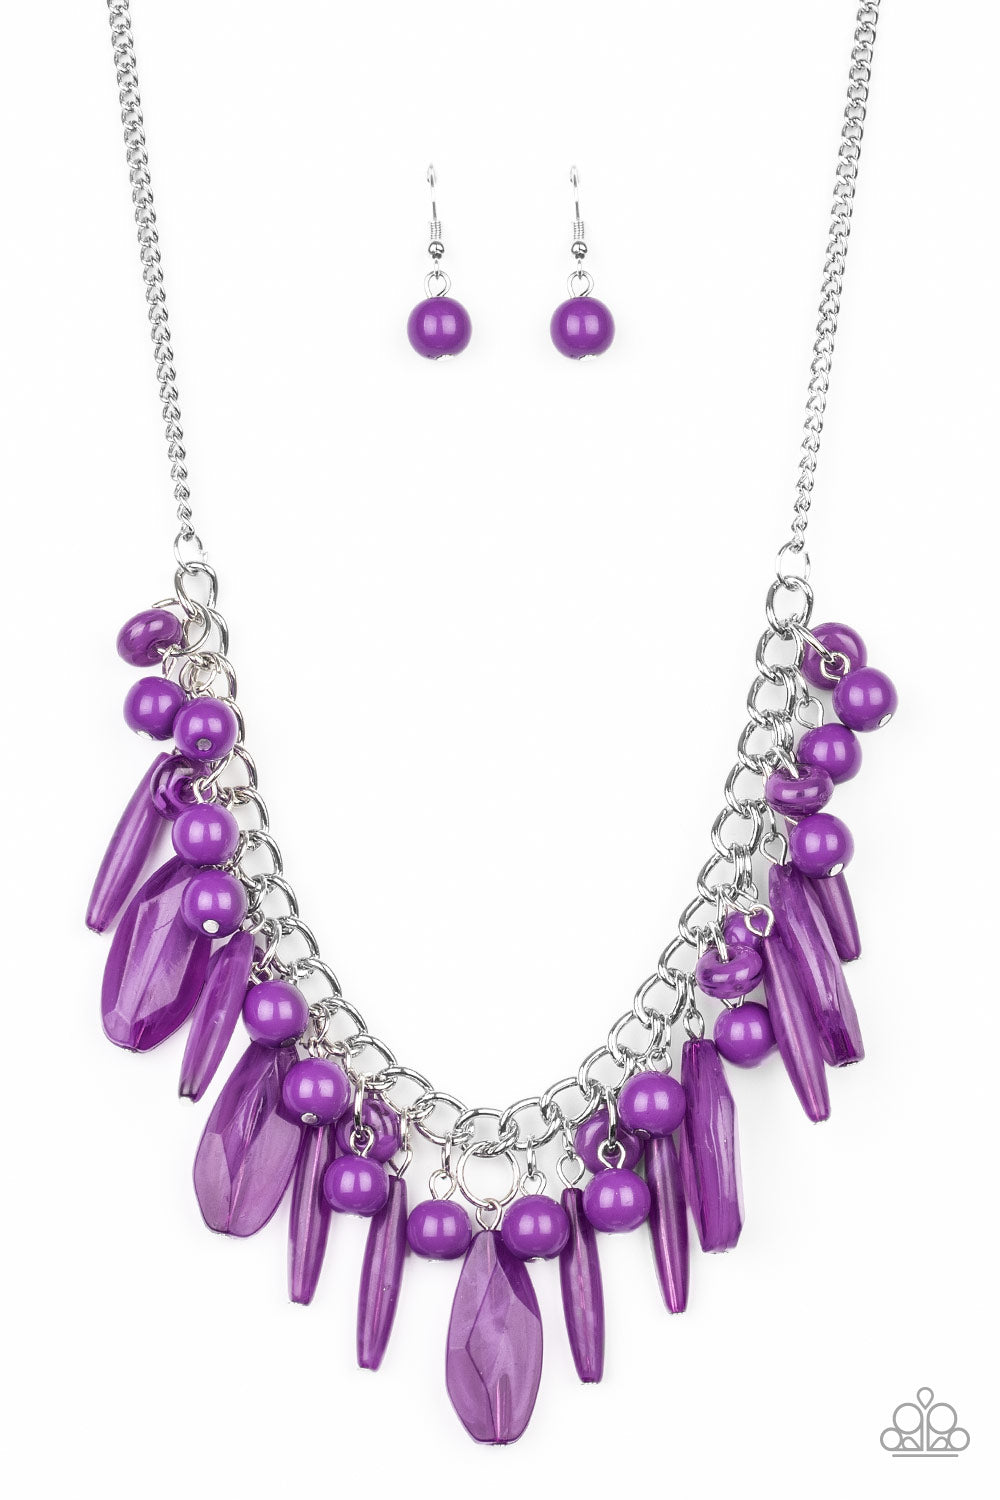 five-dollar-jewelry-miami-martinis-purple-necklace-paparazzi-accessories